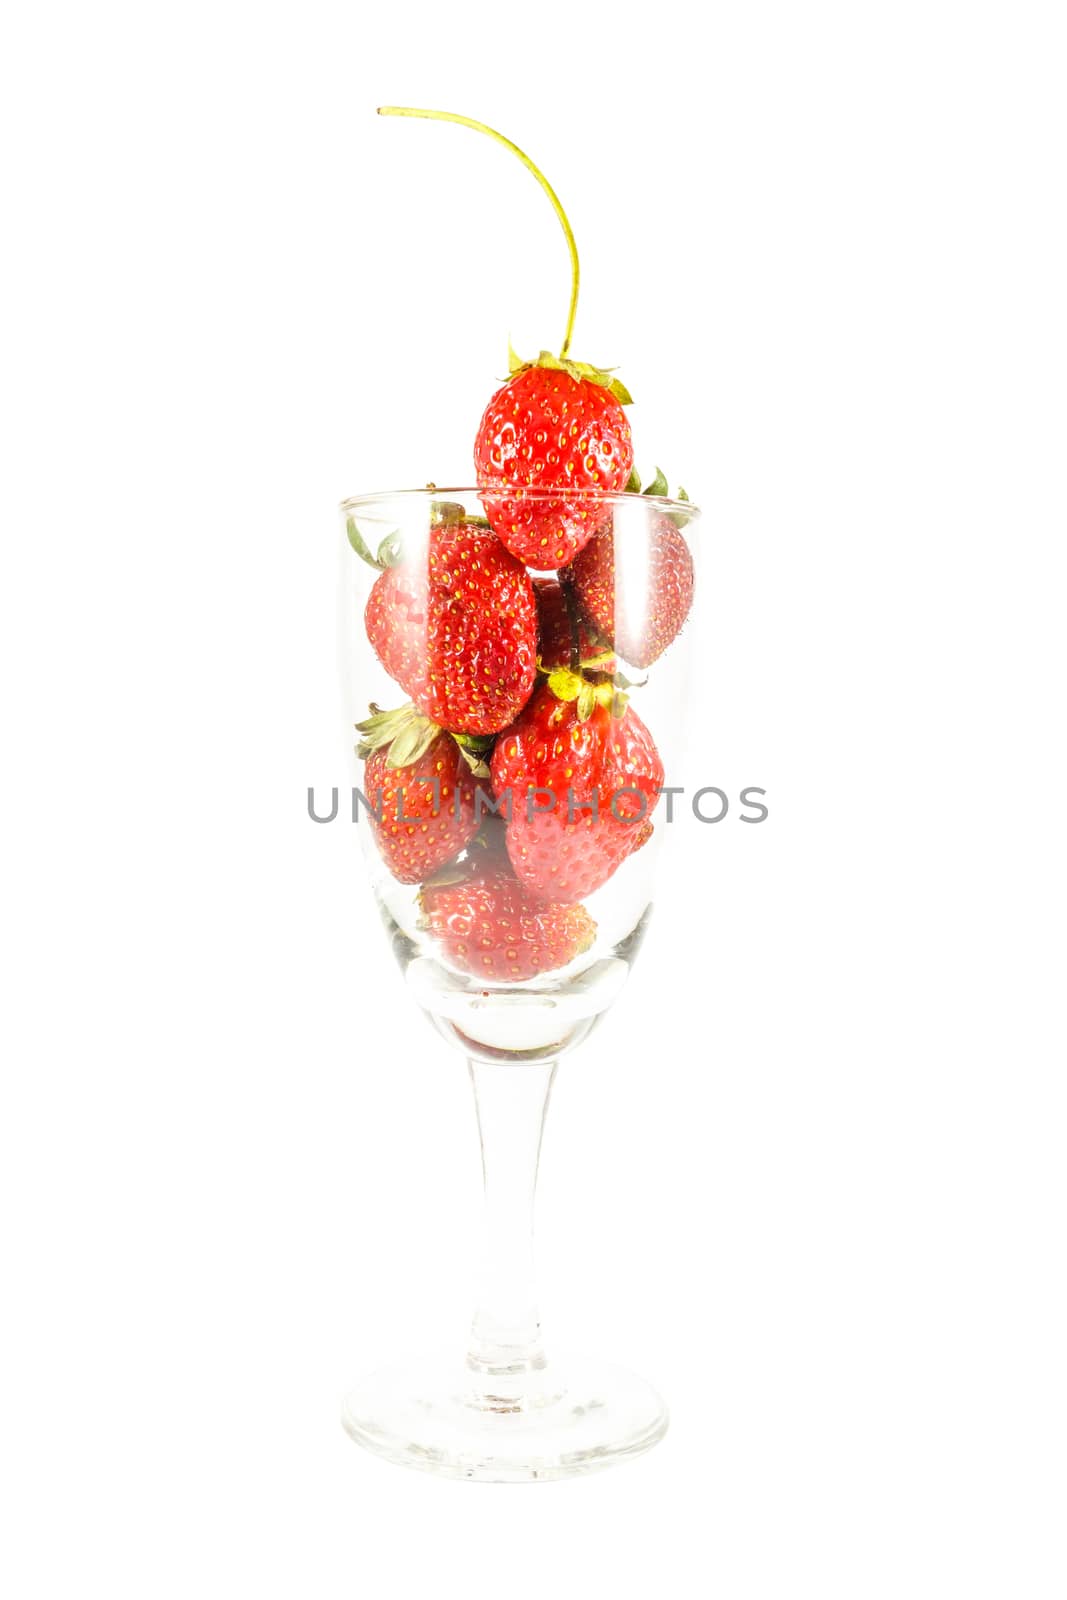 Strawberries in wine glass by stockdevil